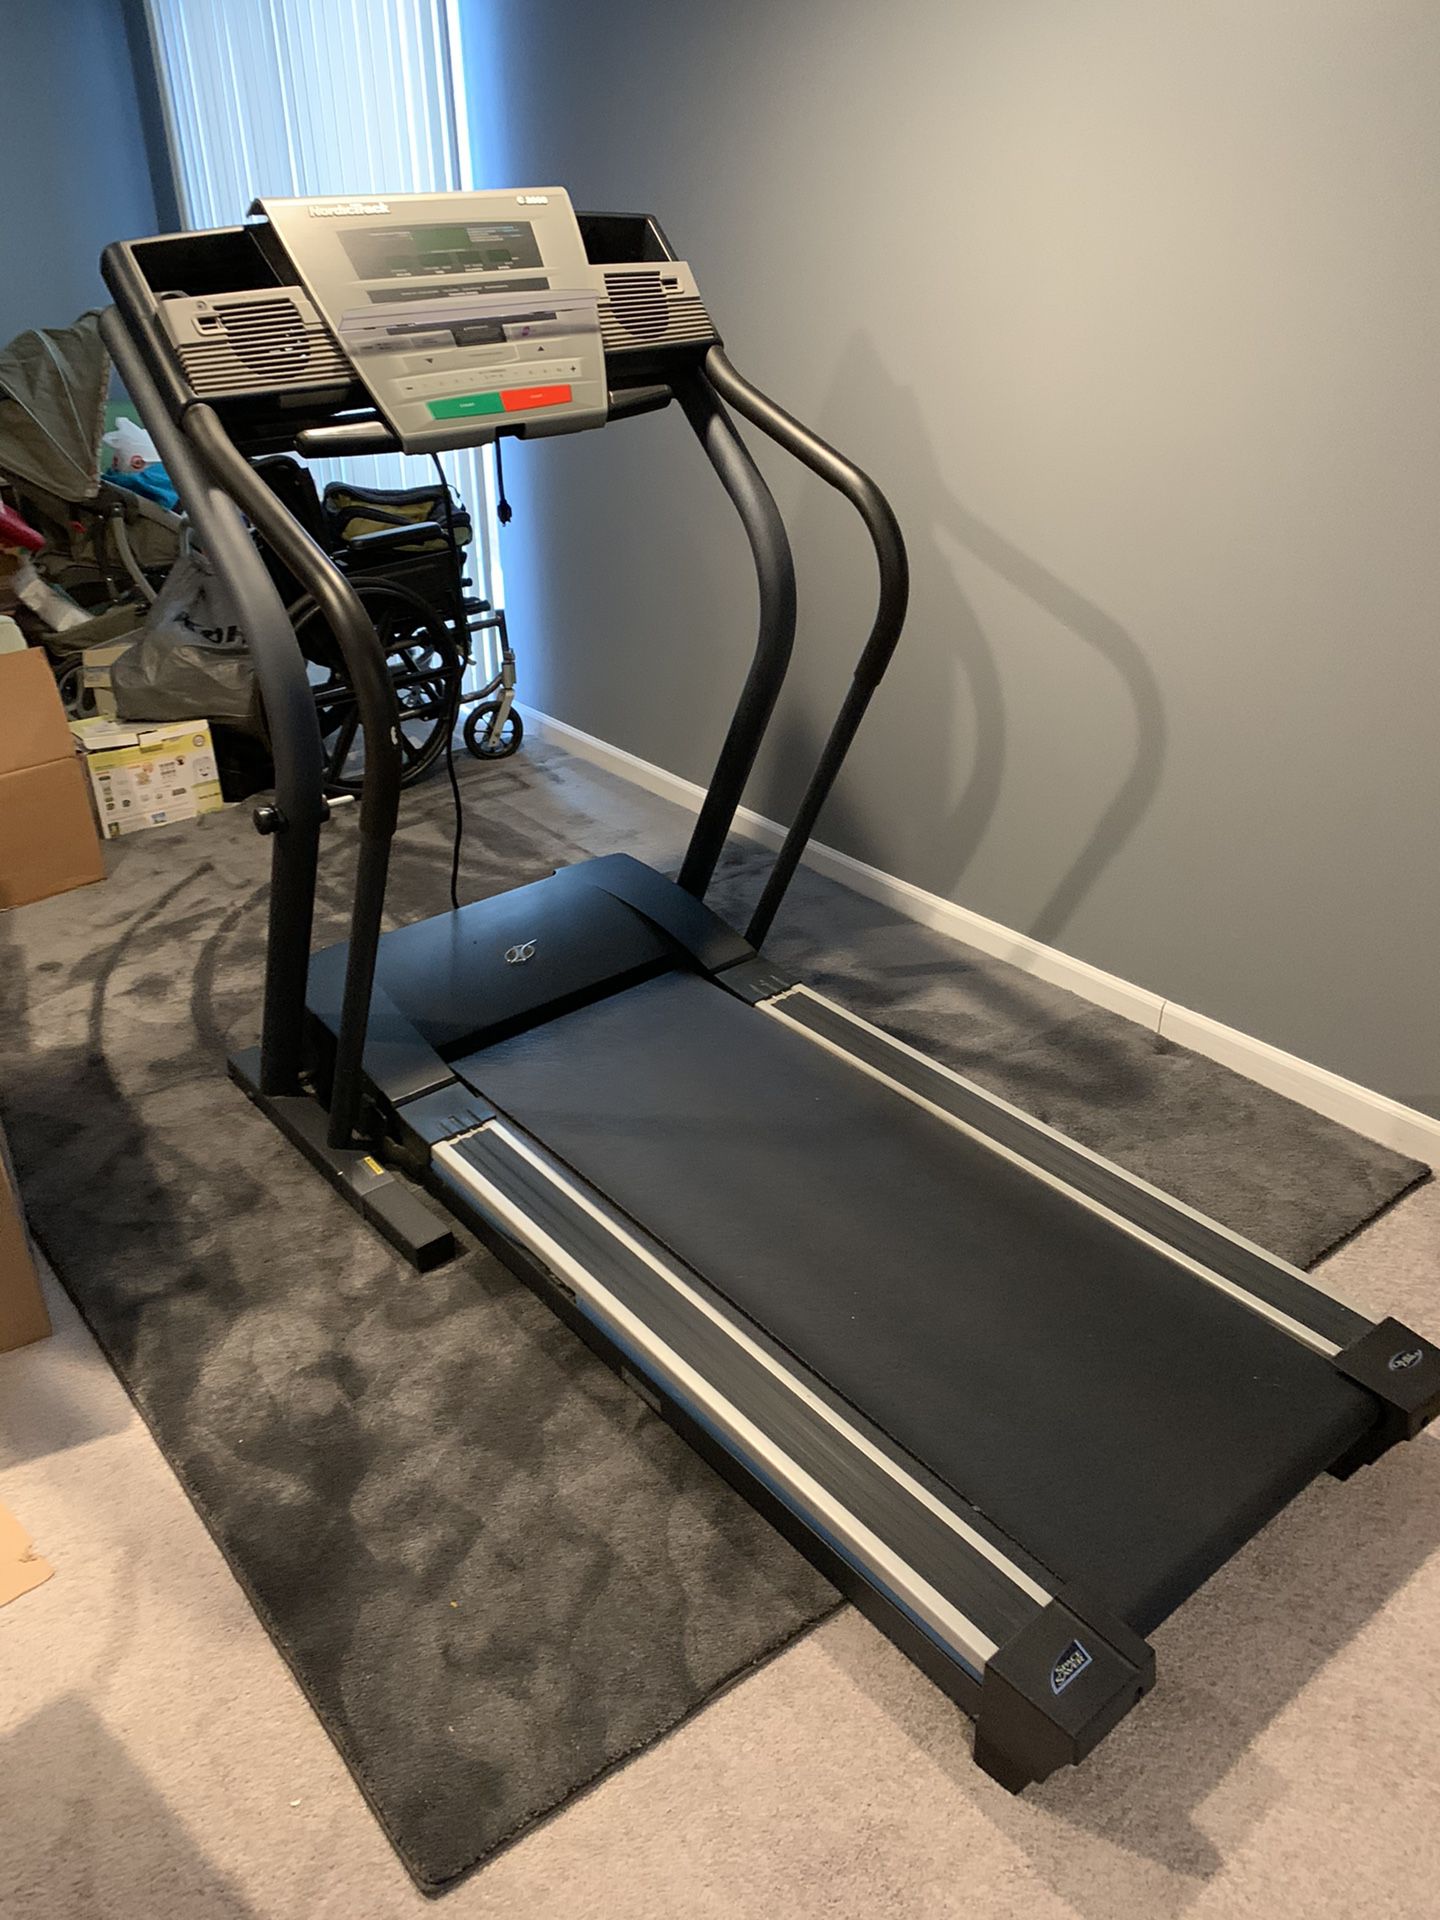 Nordic trak treadmill